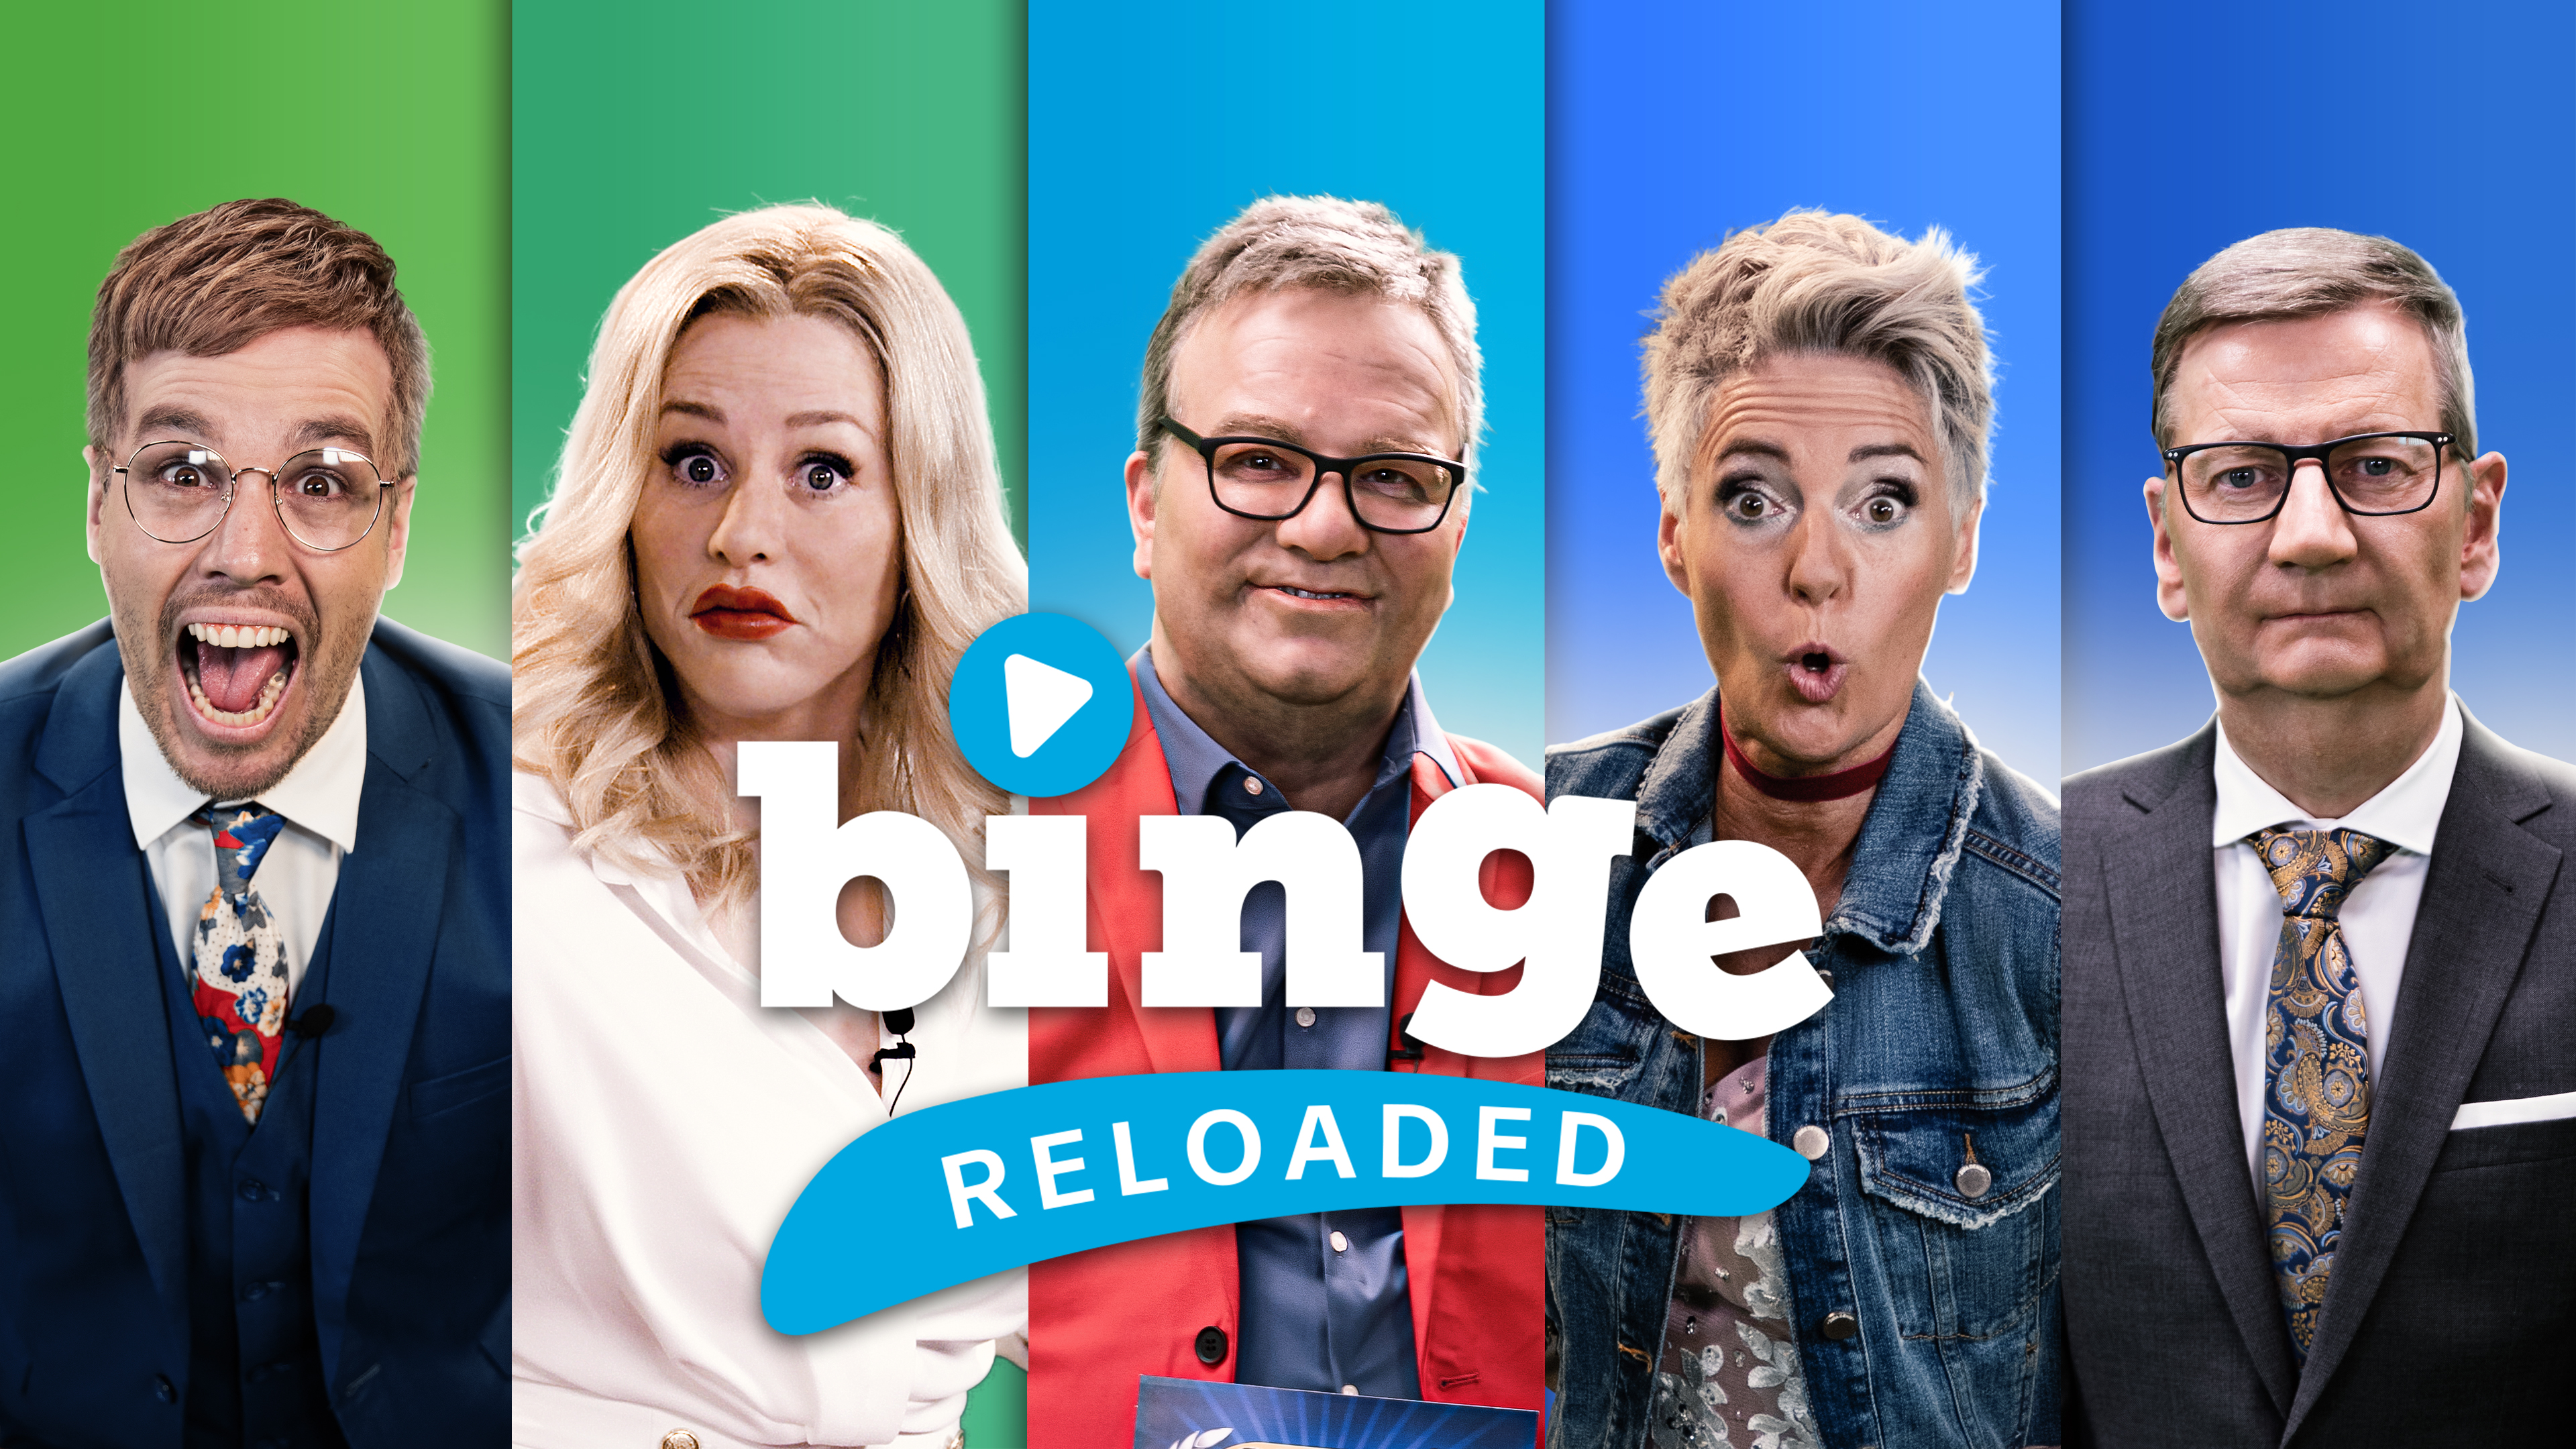 Binge Reloaded (2020)